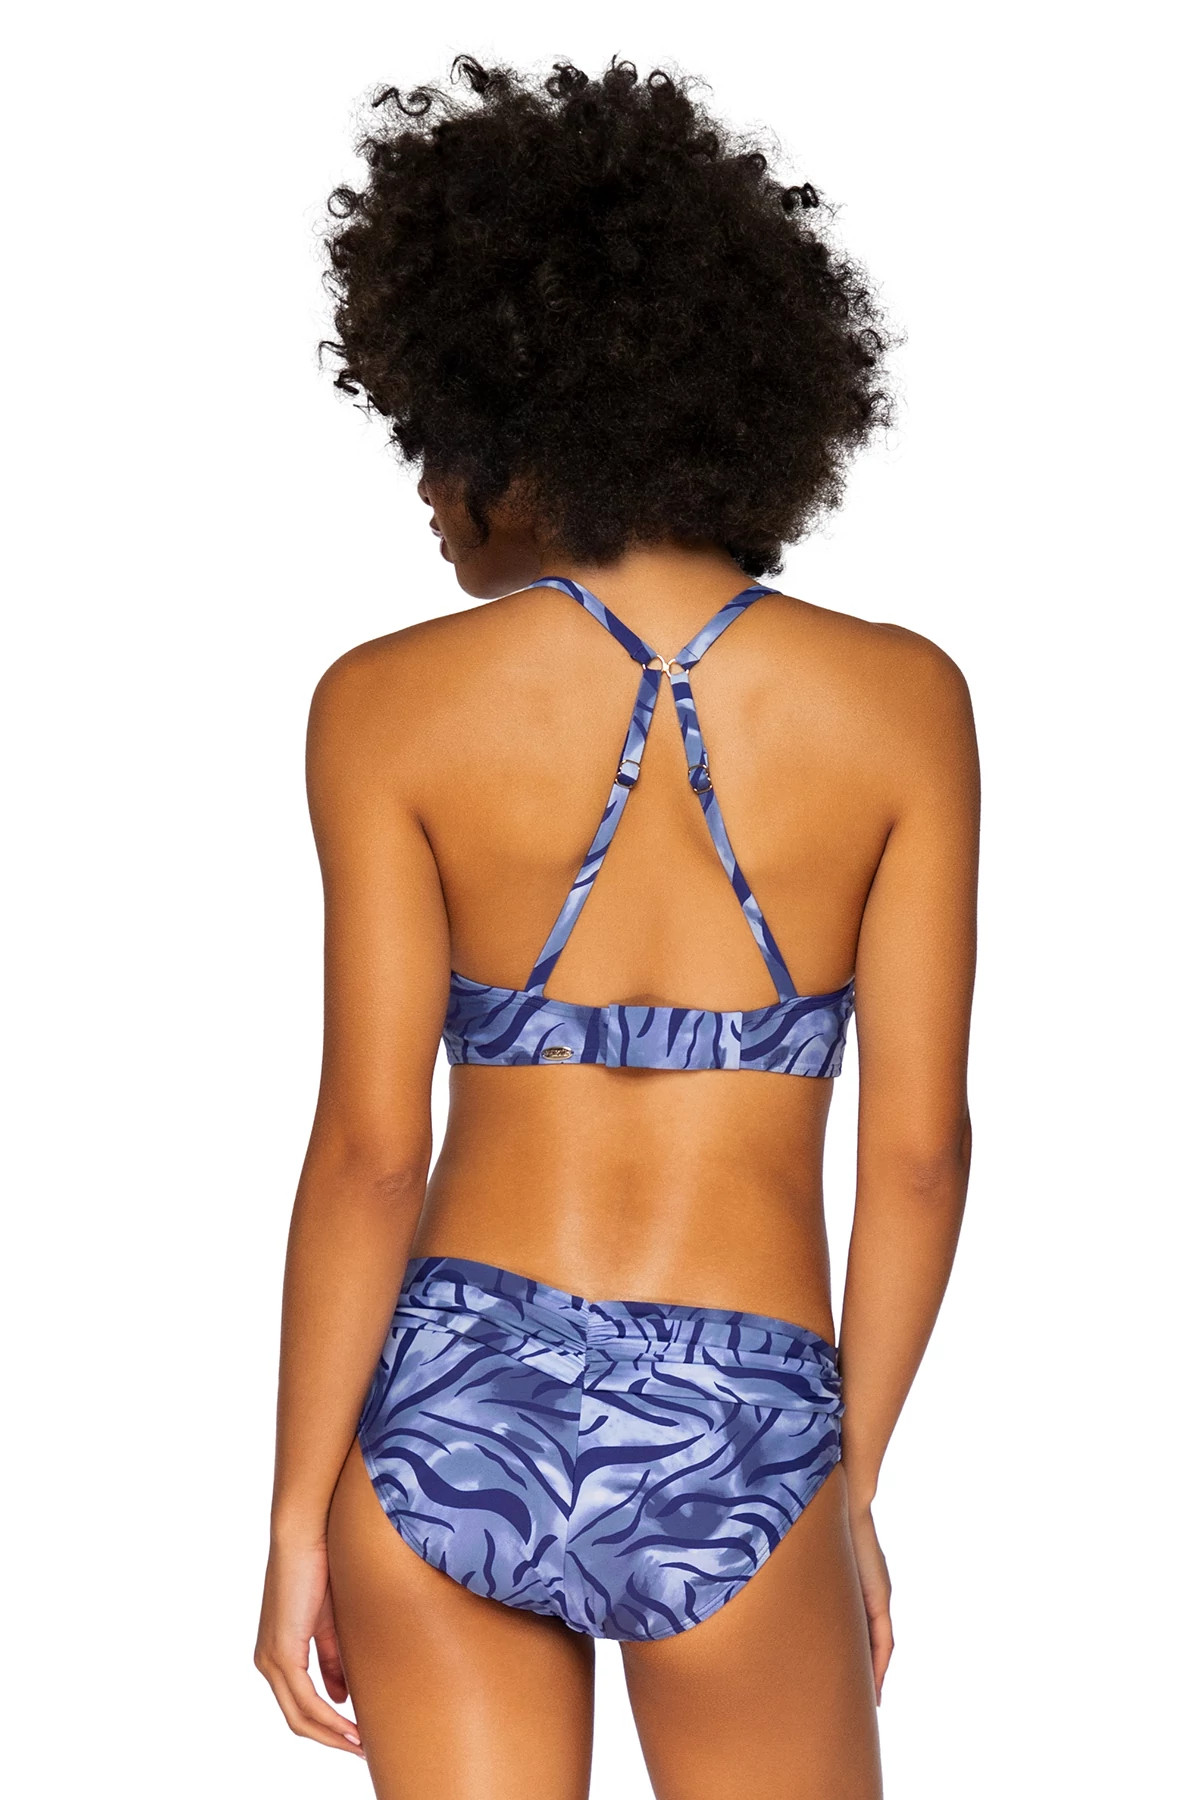 SUMATRA Kauai Underwire Bikini Top (E-H Cup) image number 3